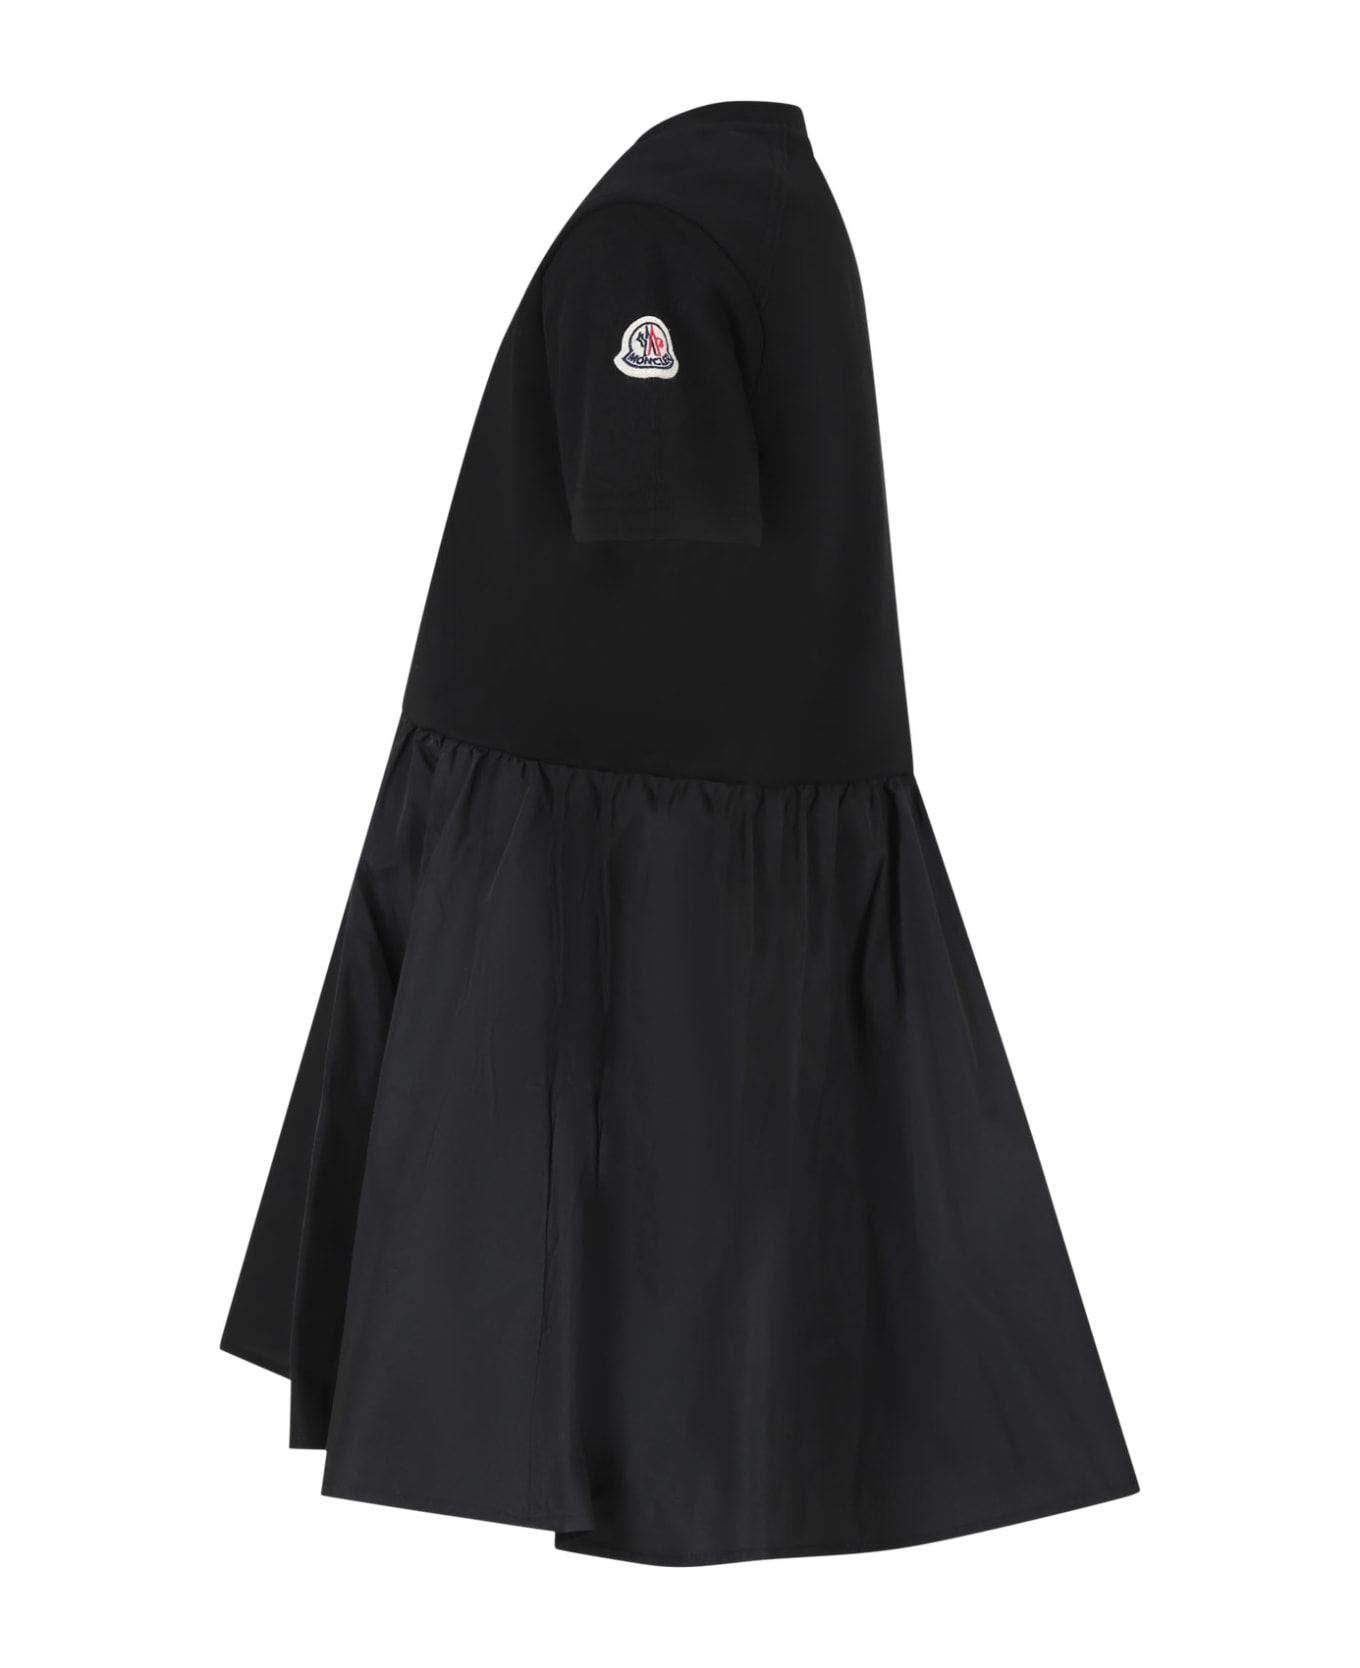 Moncler Black Dress For Girl With Logo - Black